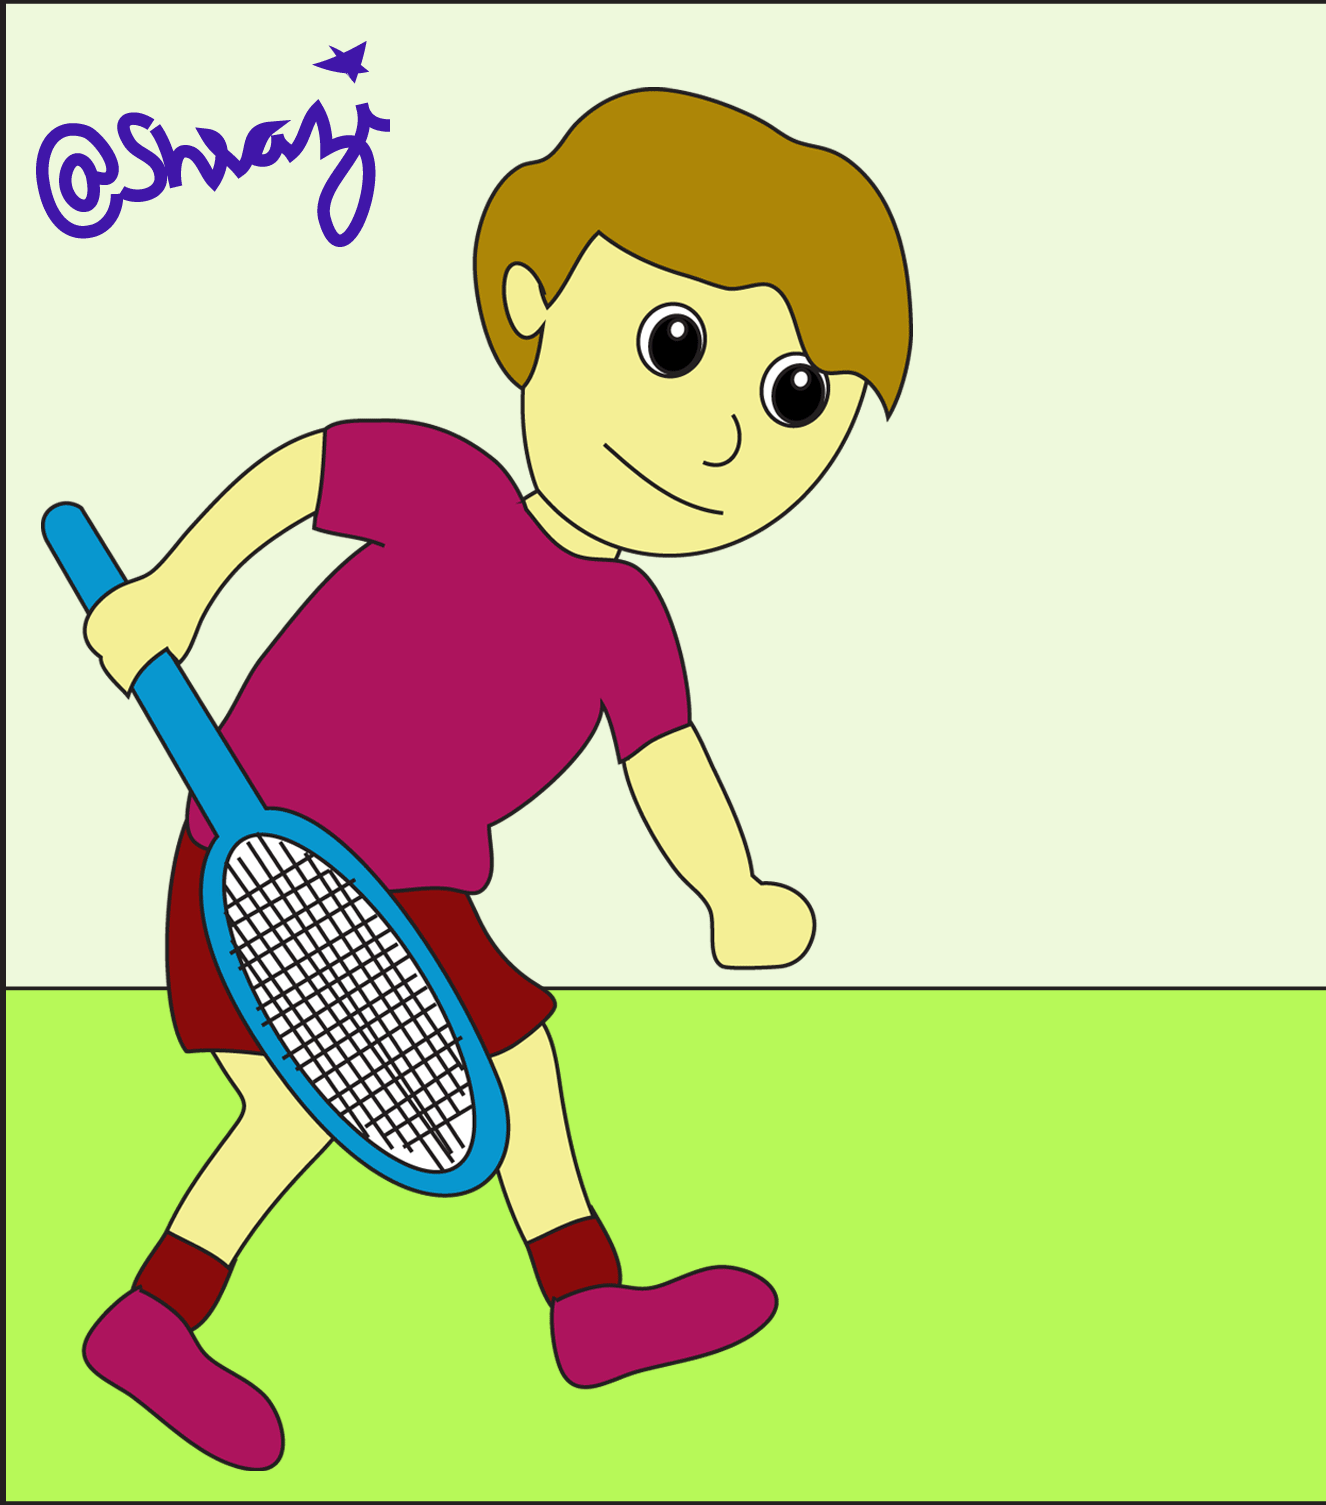 Animation GIF Scene creation of Badminton Player